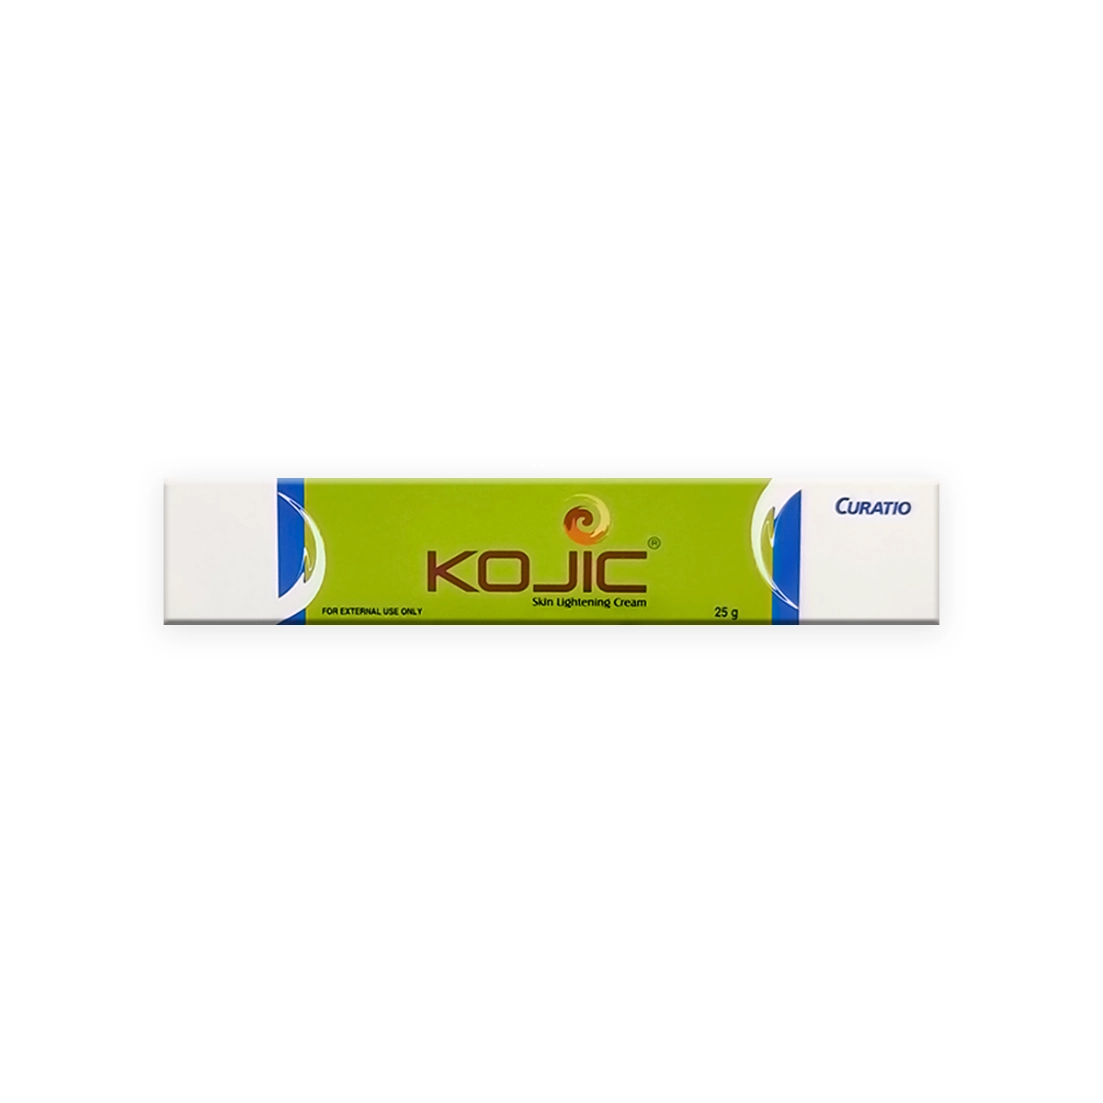 First product image of Kojic Skin Lightening Cream 25g